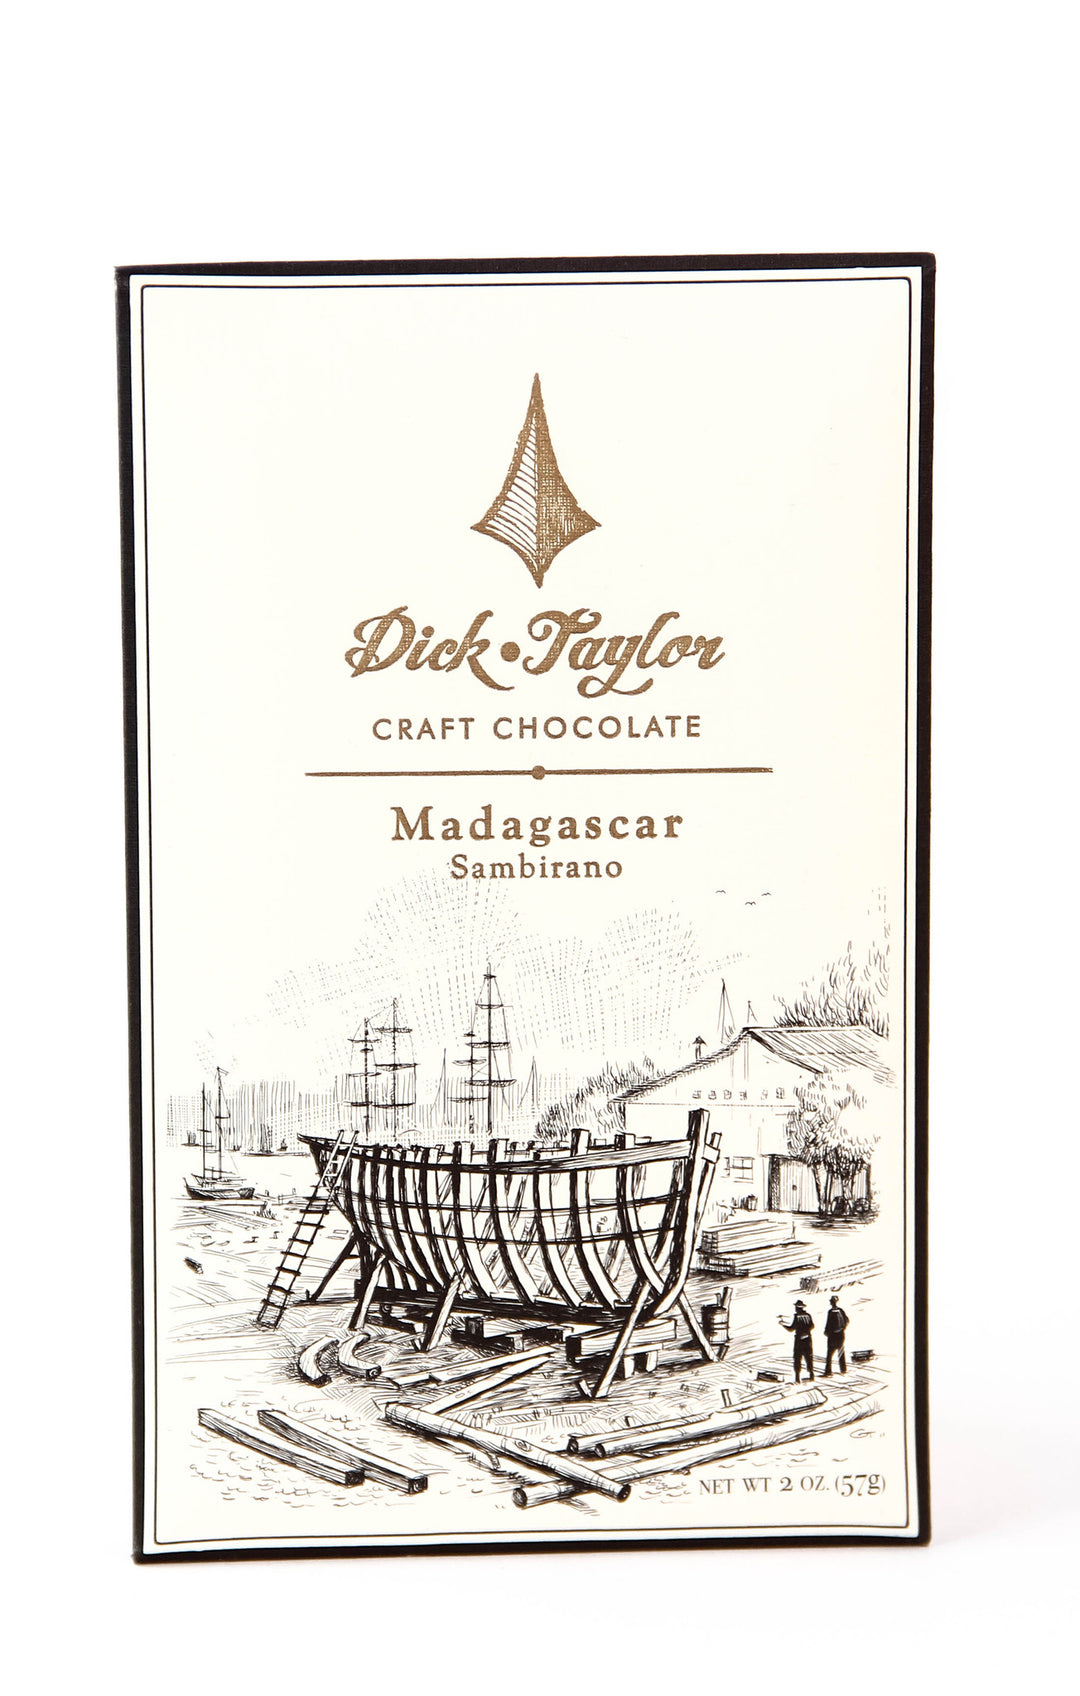 Dick Taylor Madagascar 72% Dark Chocolate